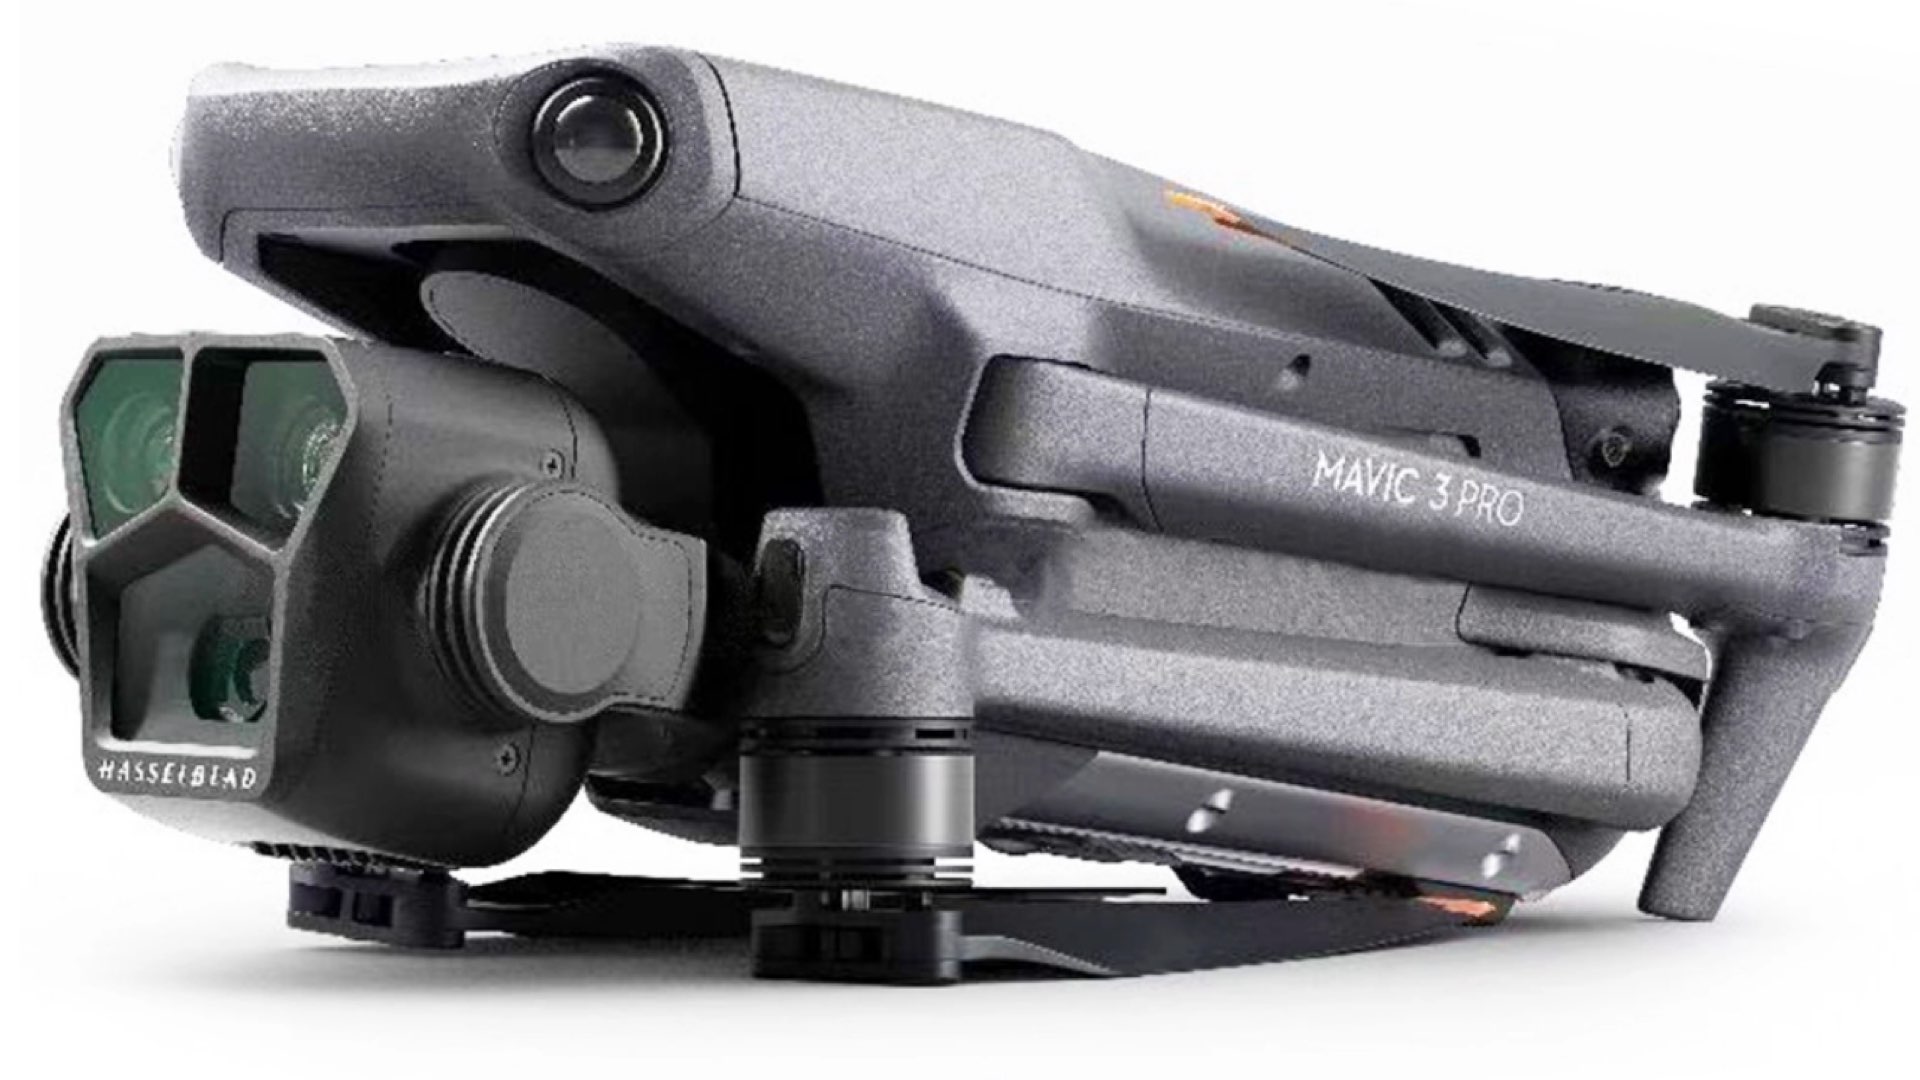 DJI Mavic 3 Pro: Triple-Camera Drone